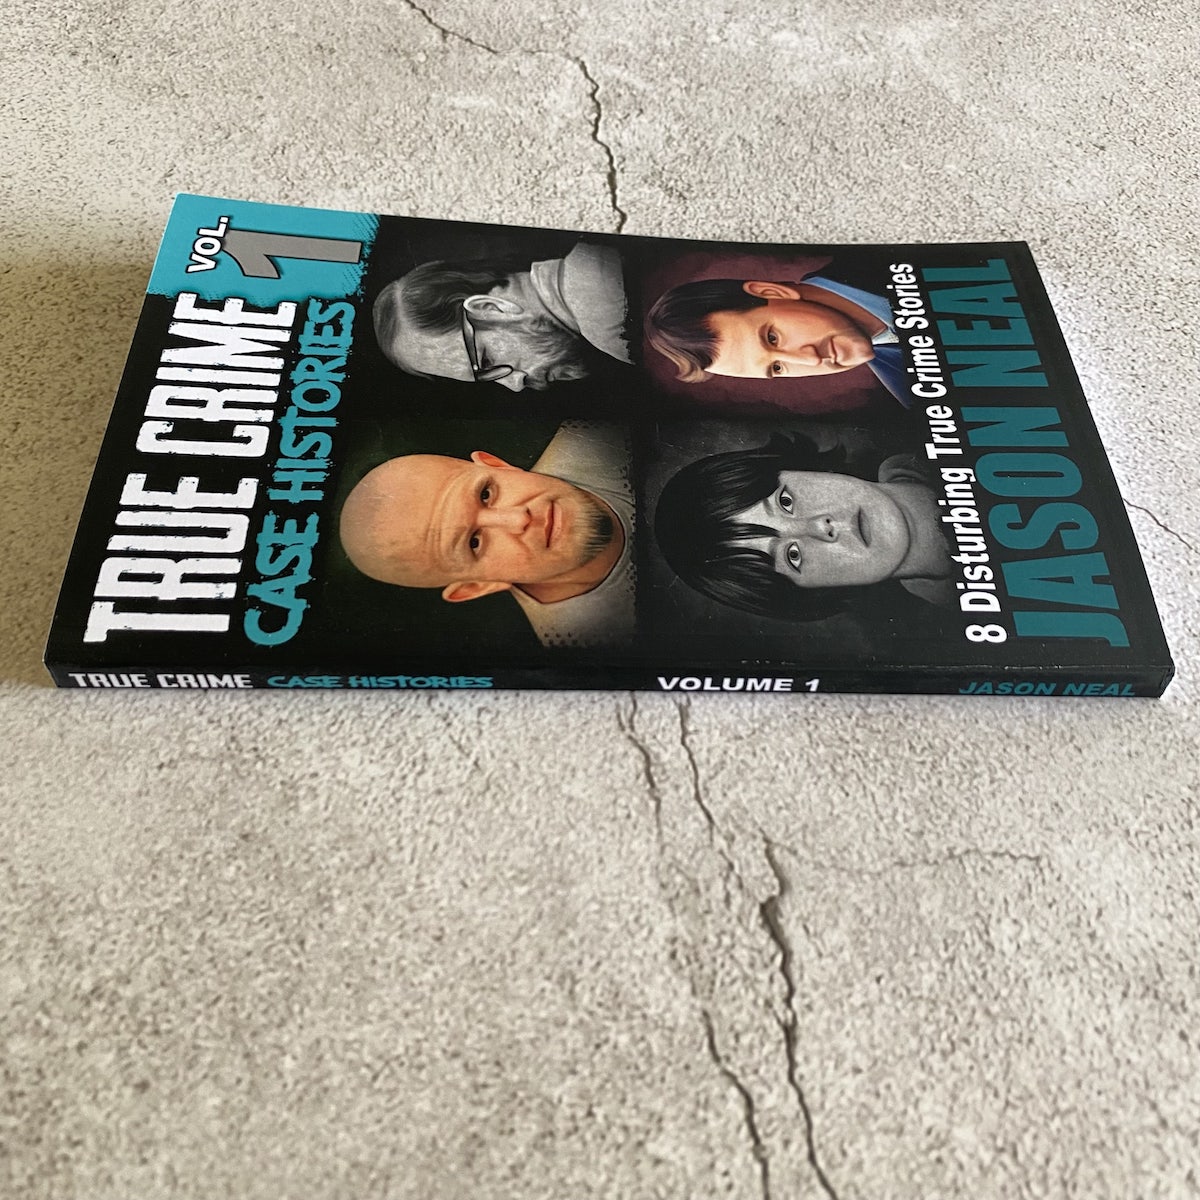 True Crime Case Histories - Volume 1 (PAPERBACK)